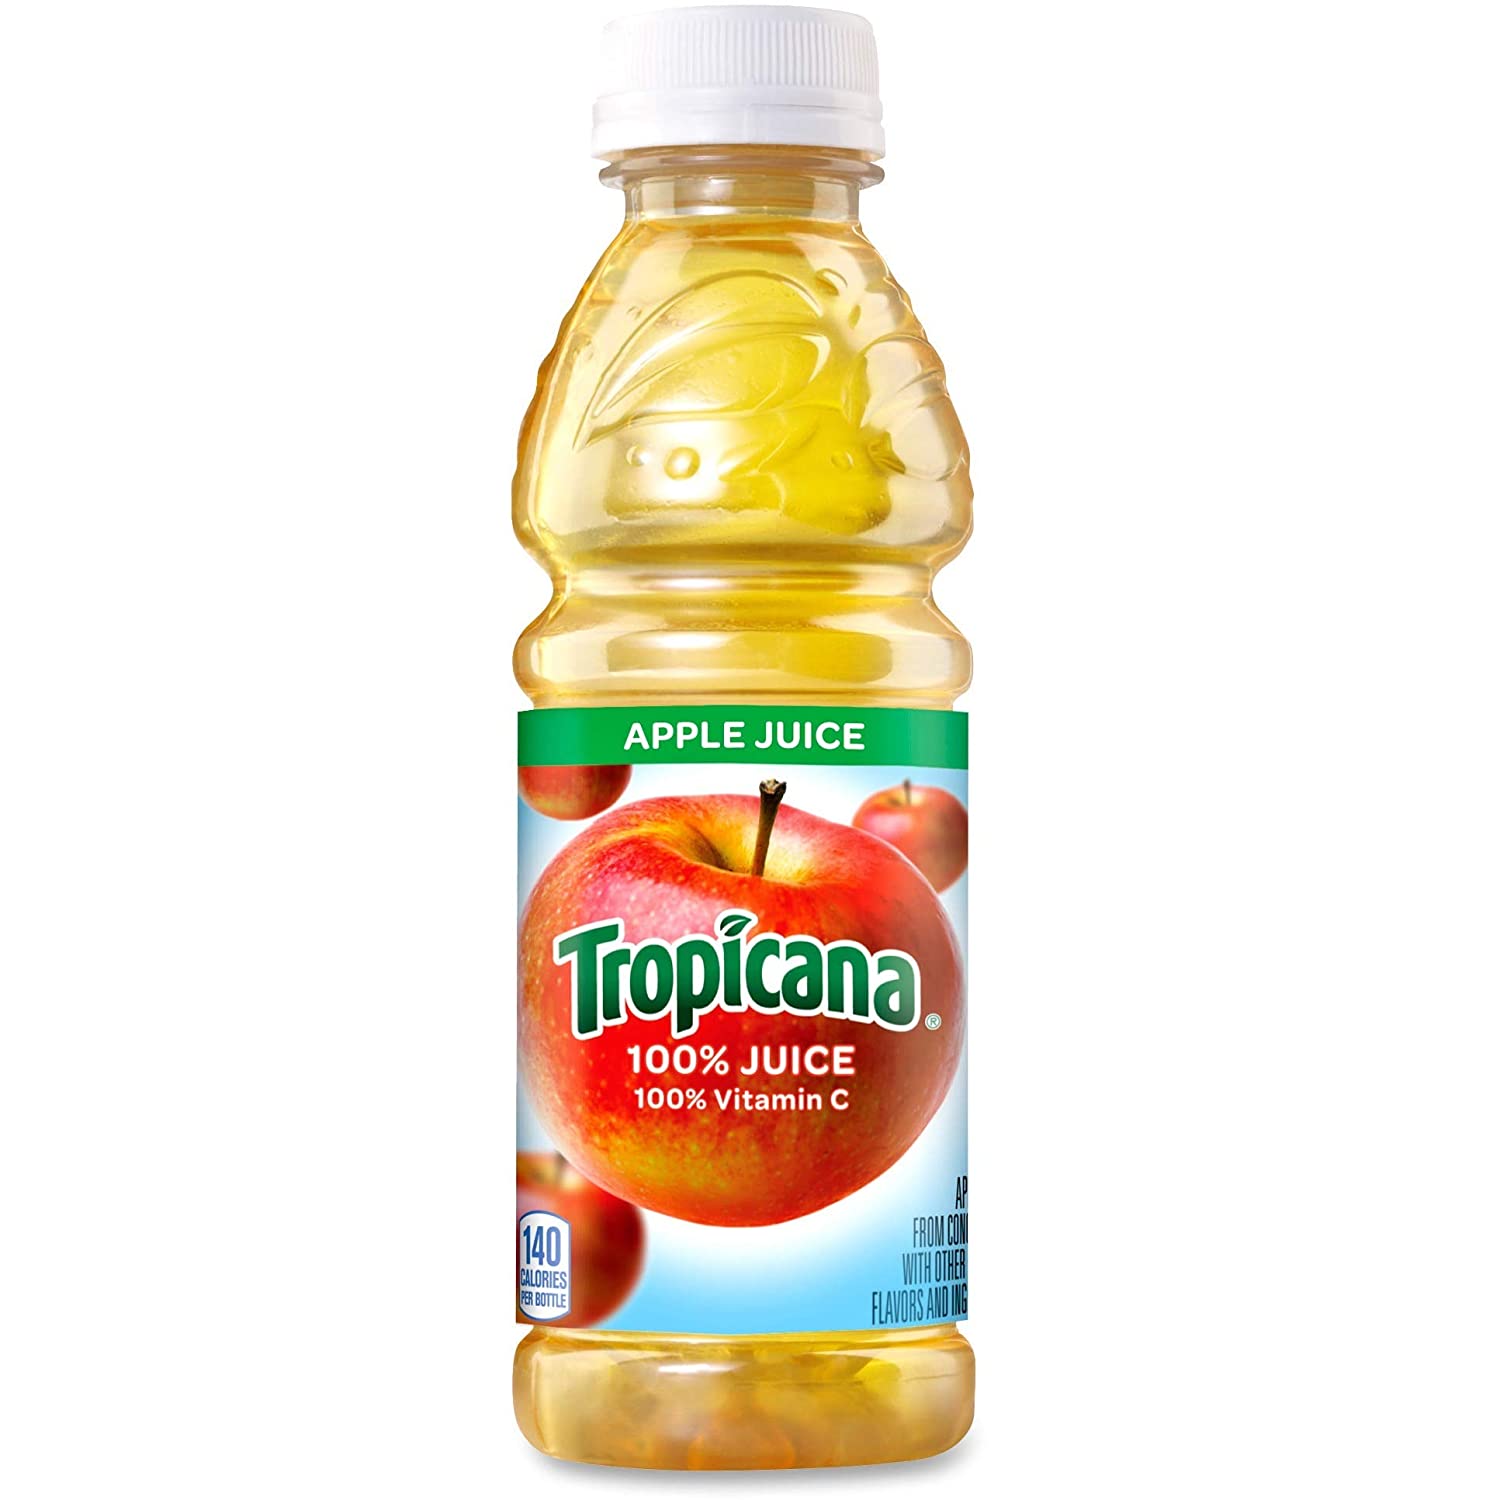 Tropicana Apple Juice $13.28 free shipping